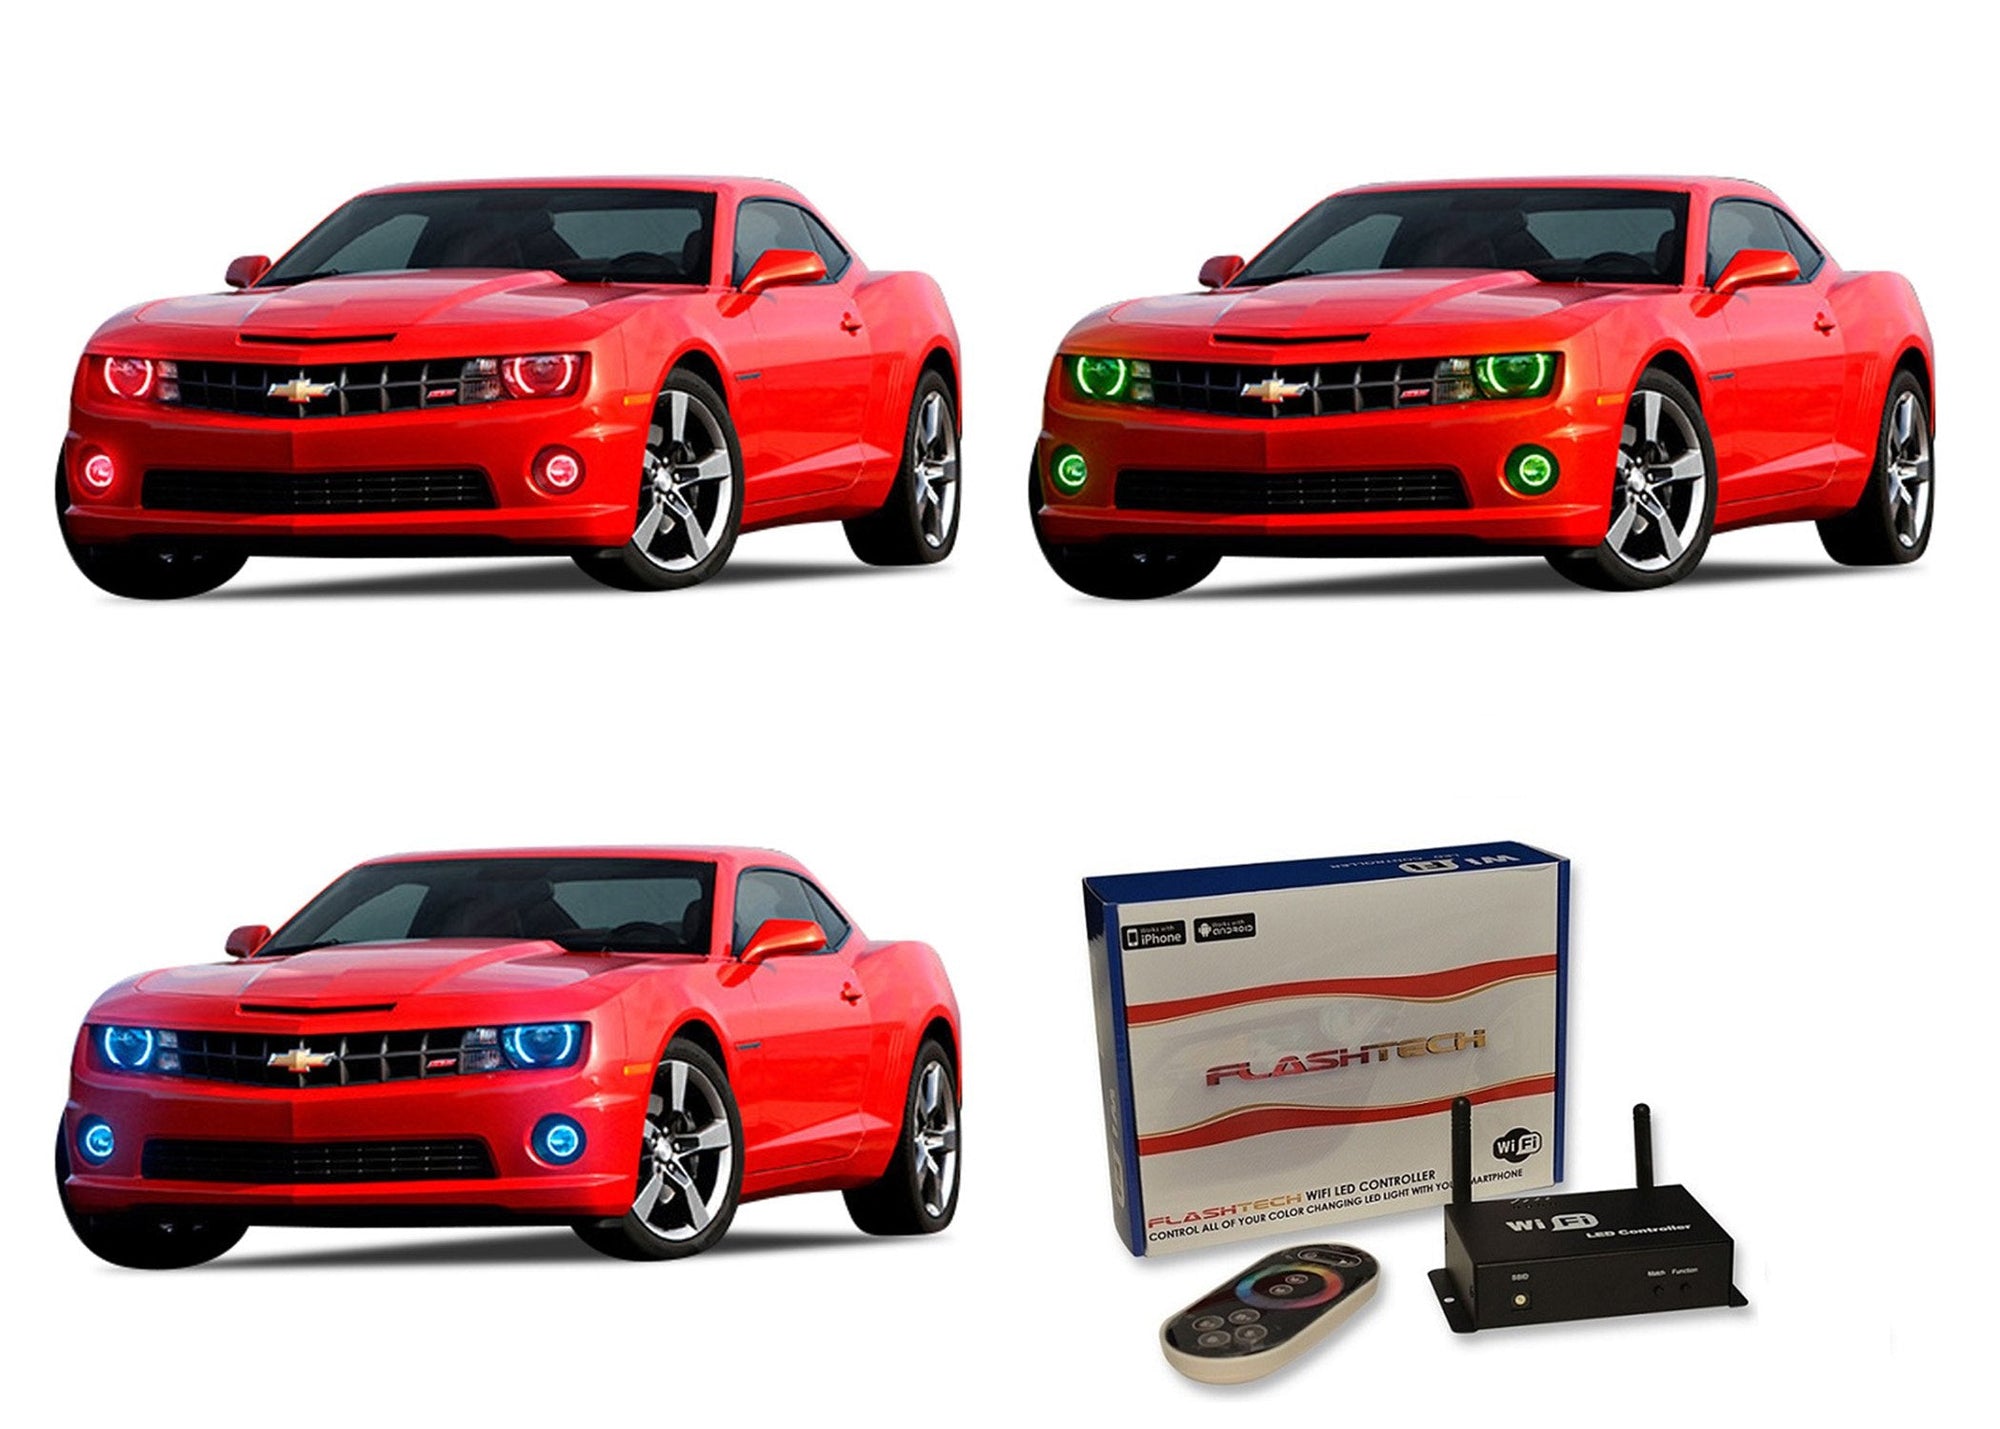 Chevrolet-Camaro-2010, 2011, 2012, 2013-LED-Halo-Headlights and Fog Lights-RGB-WiFi Remote-CY-CARS1013-V3HFWI